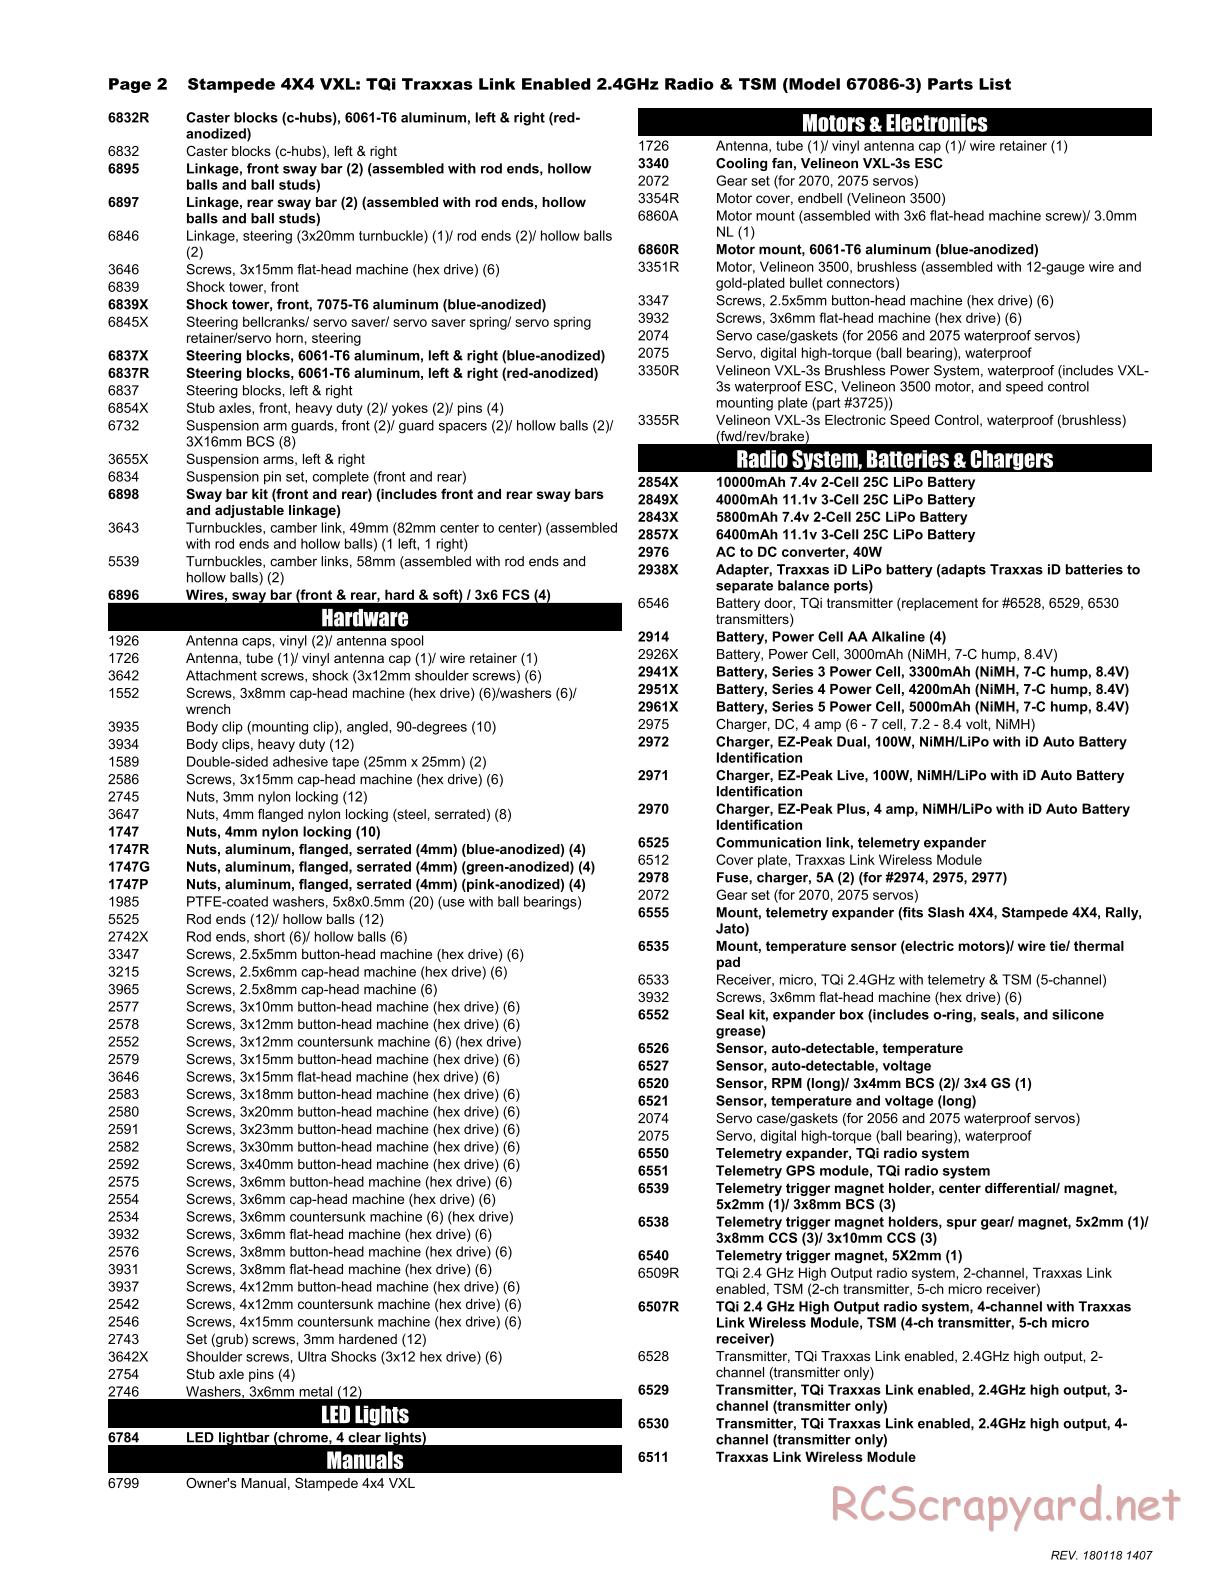 Traxxas - Stampede 4x4 VXL TSM (2015) - Parts List - Page 2